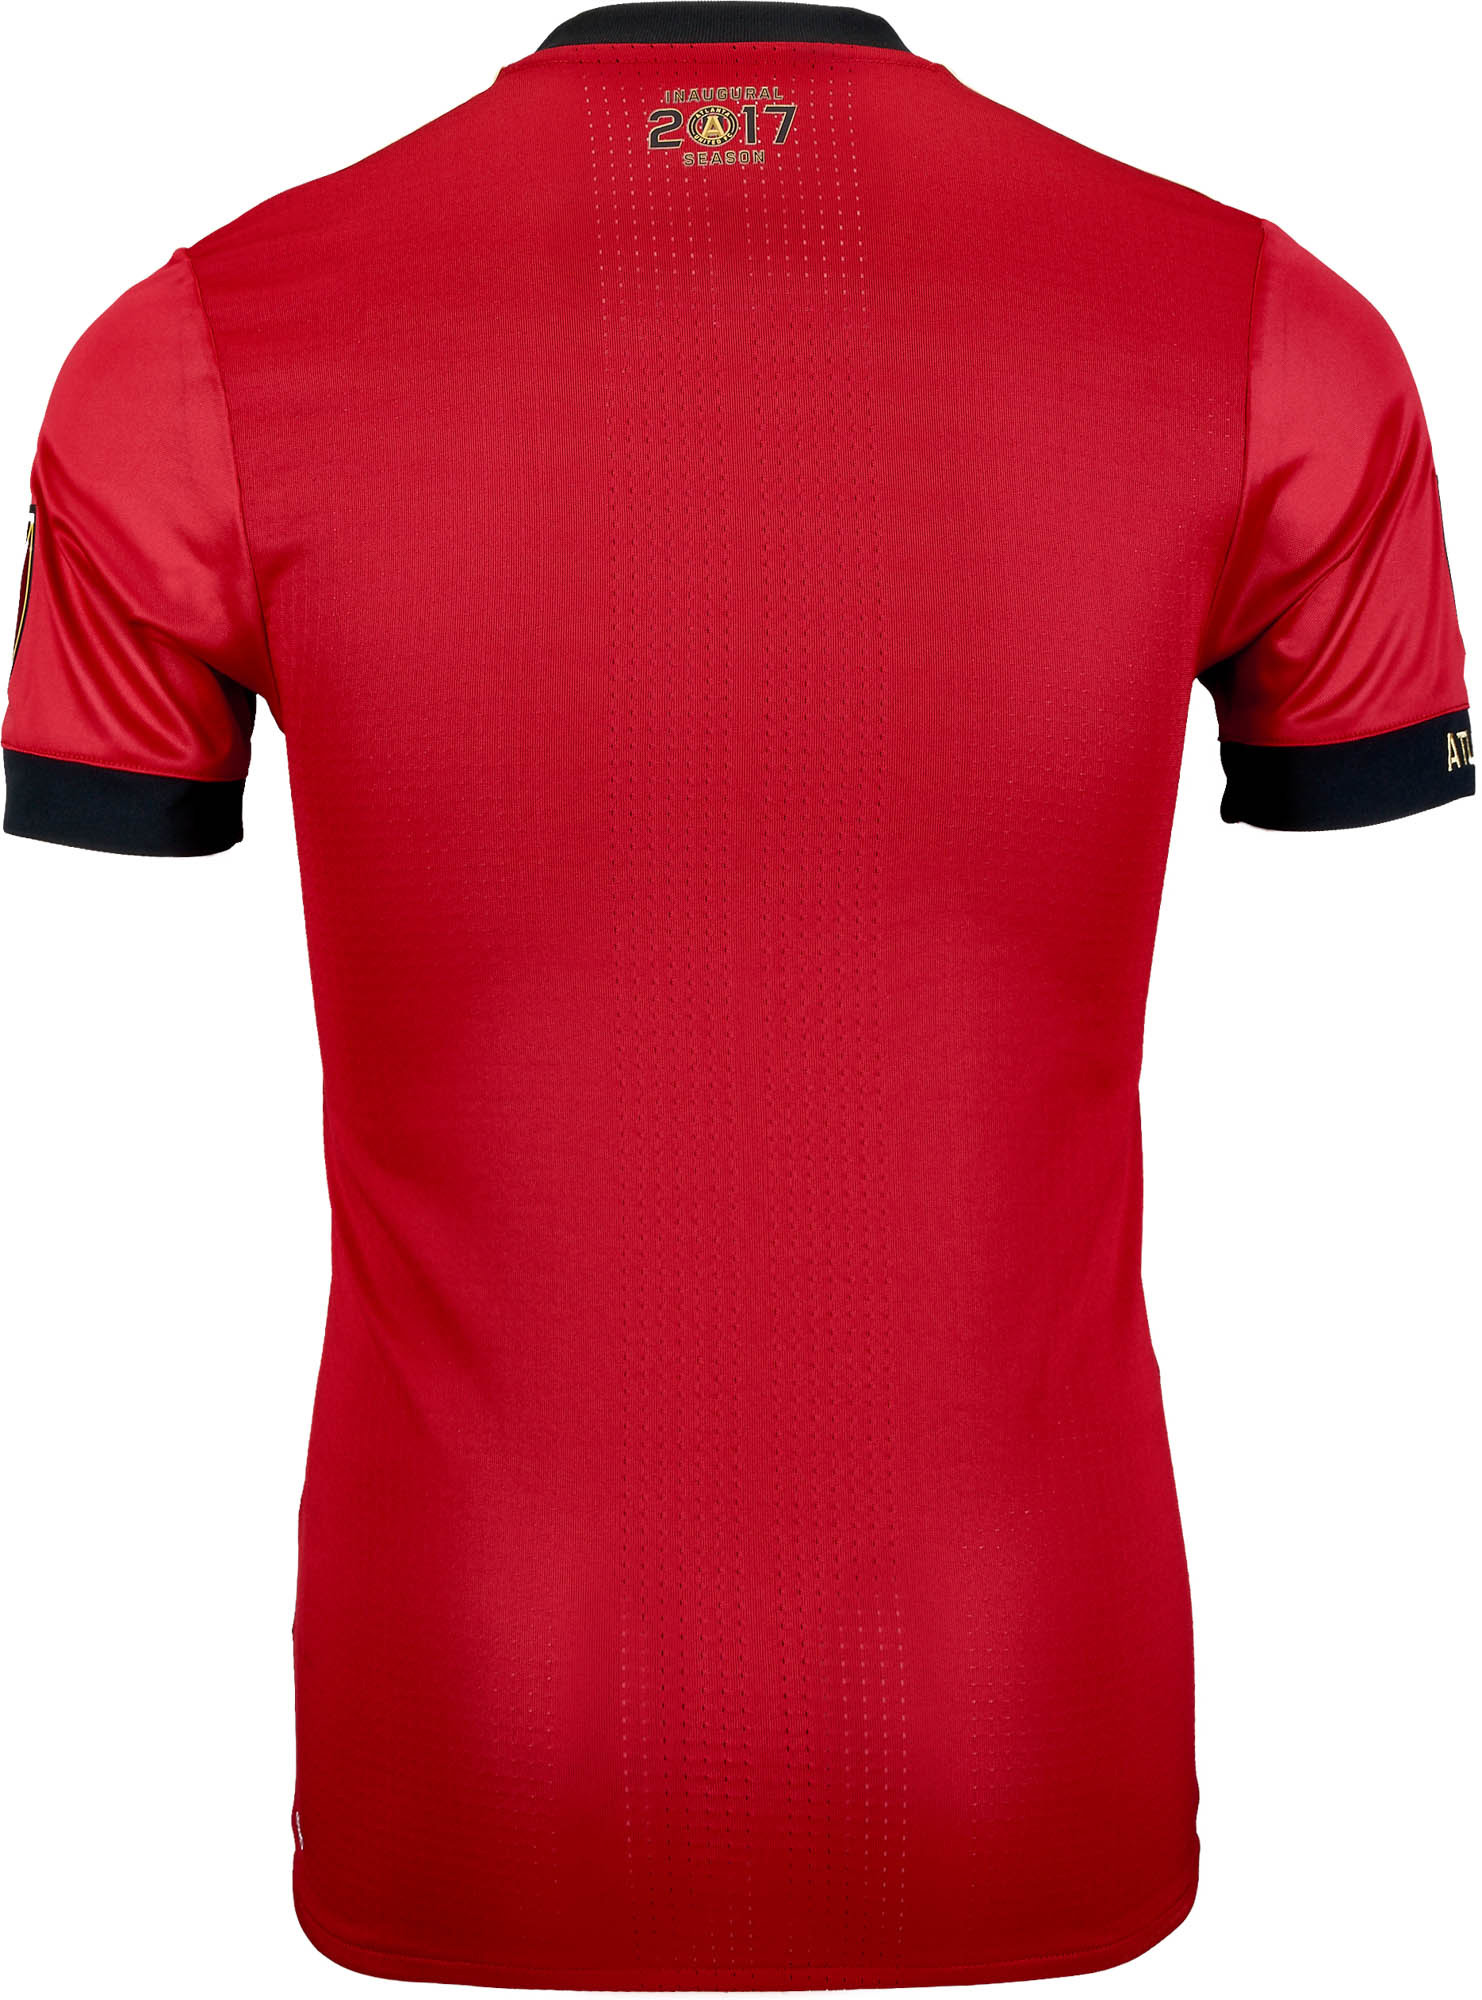 atlanta united 2017 jersey